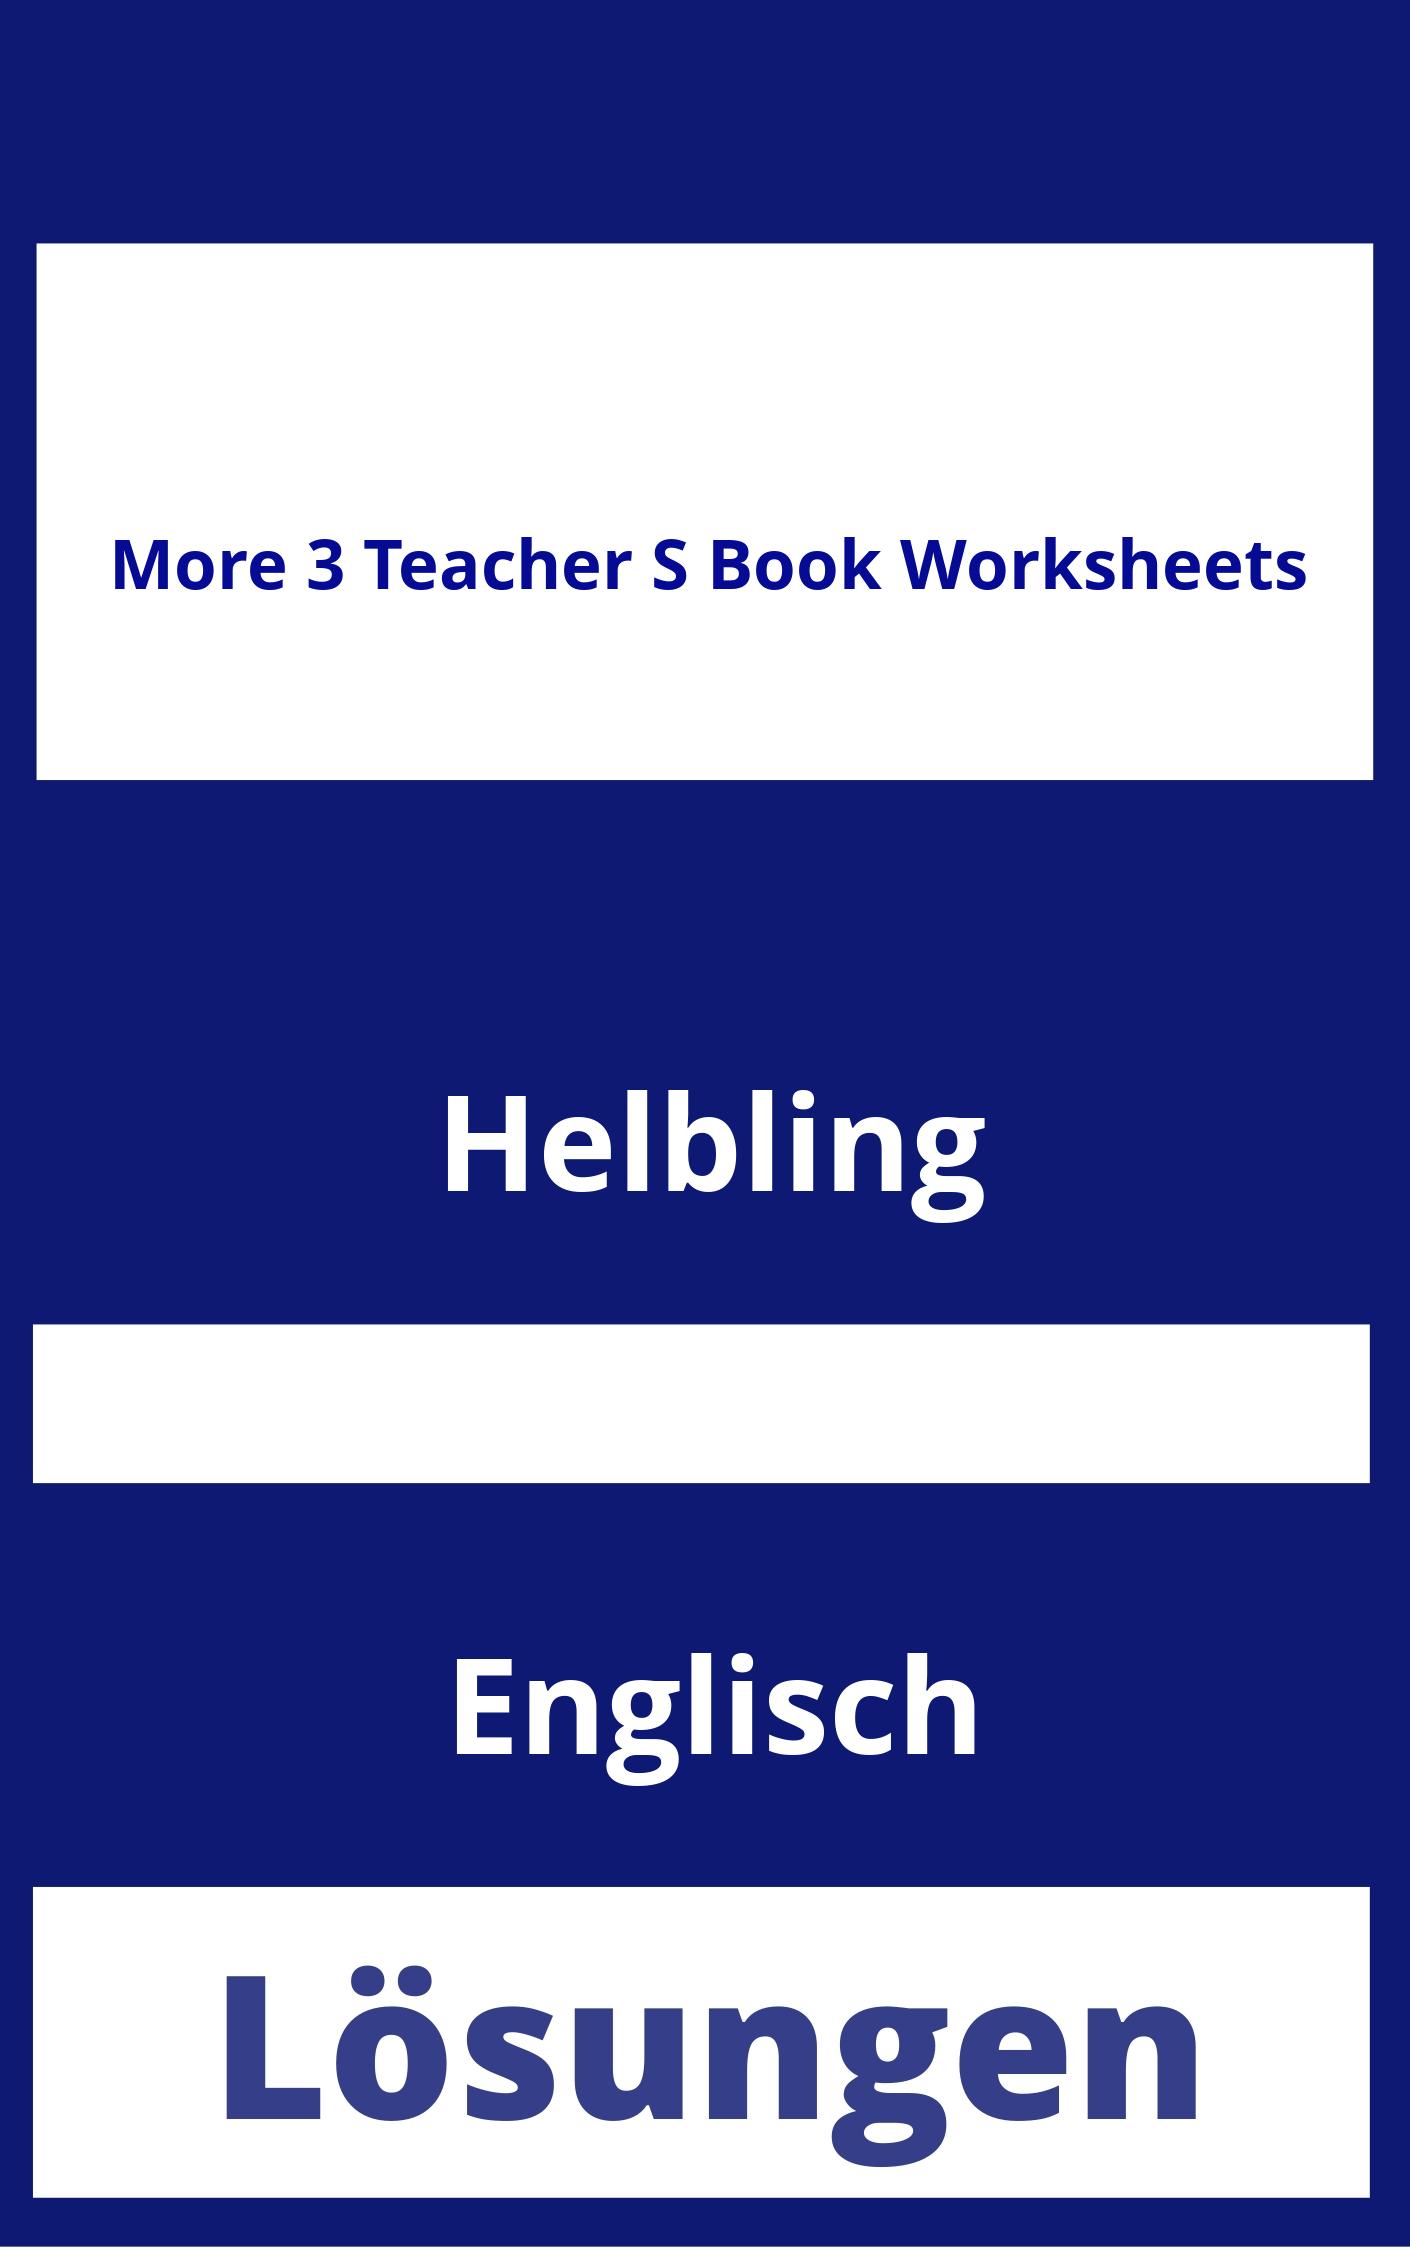 More 3 Teacher's book Worksheets